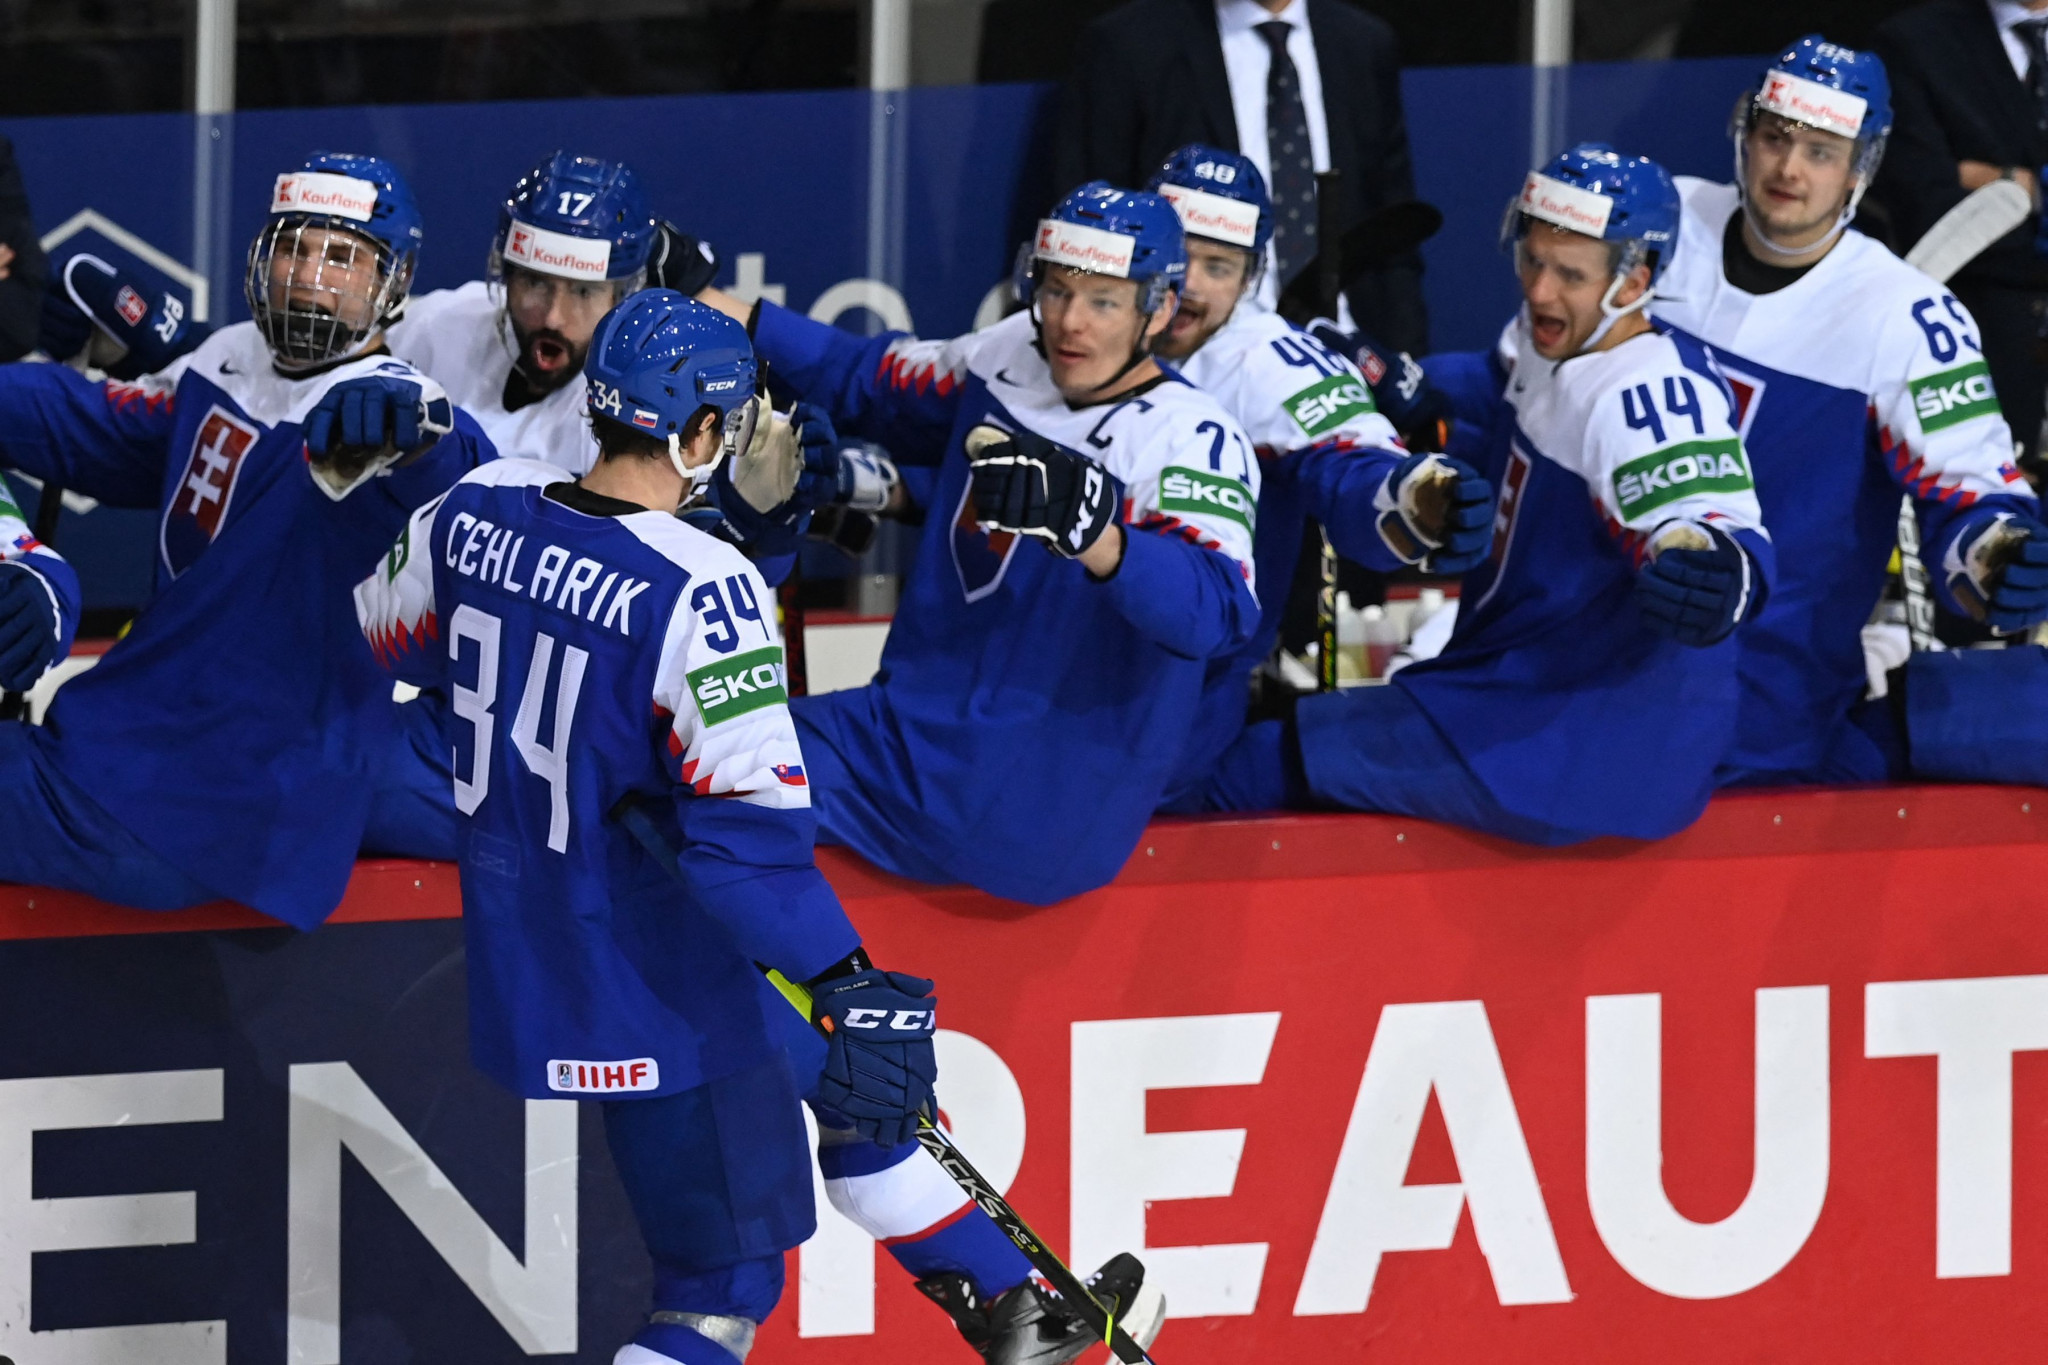 Slovakia seek Beijing 2022 spot as crunch time reached in men's ice hockey qualifiers